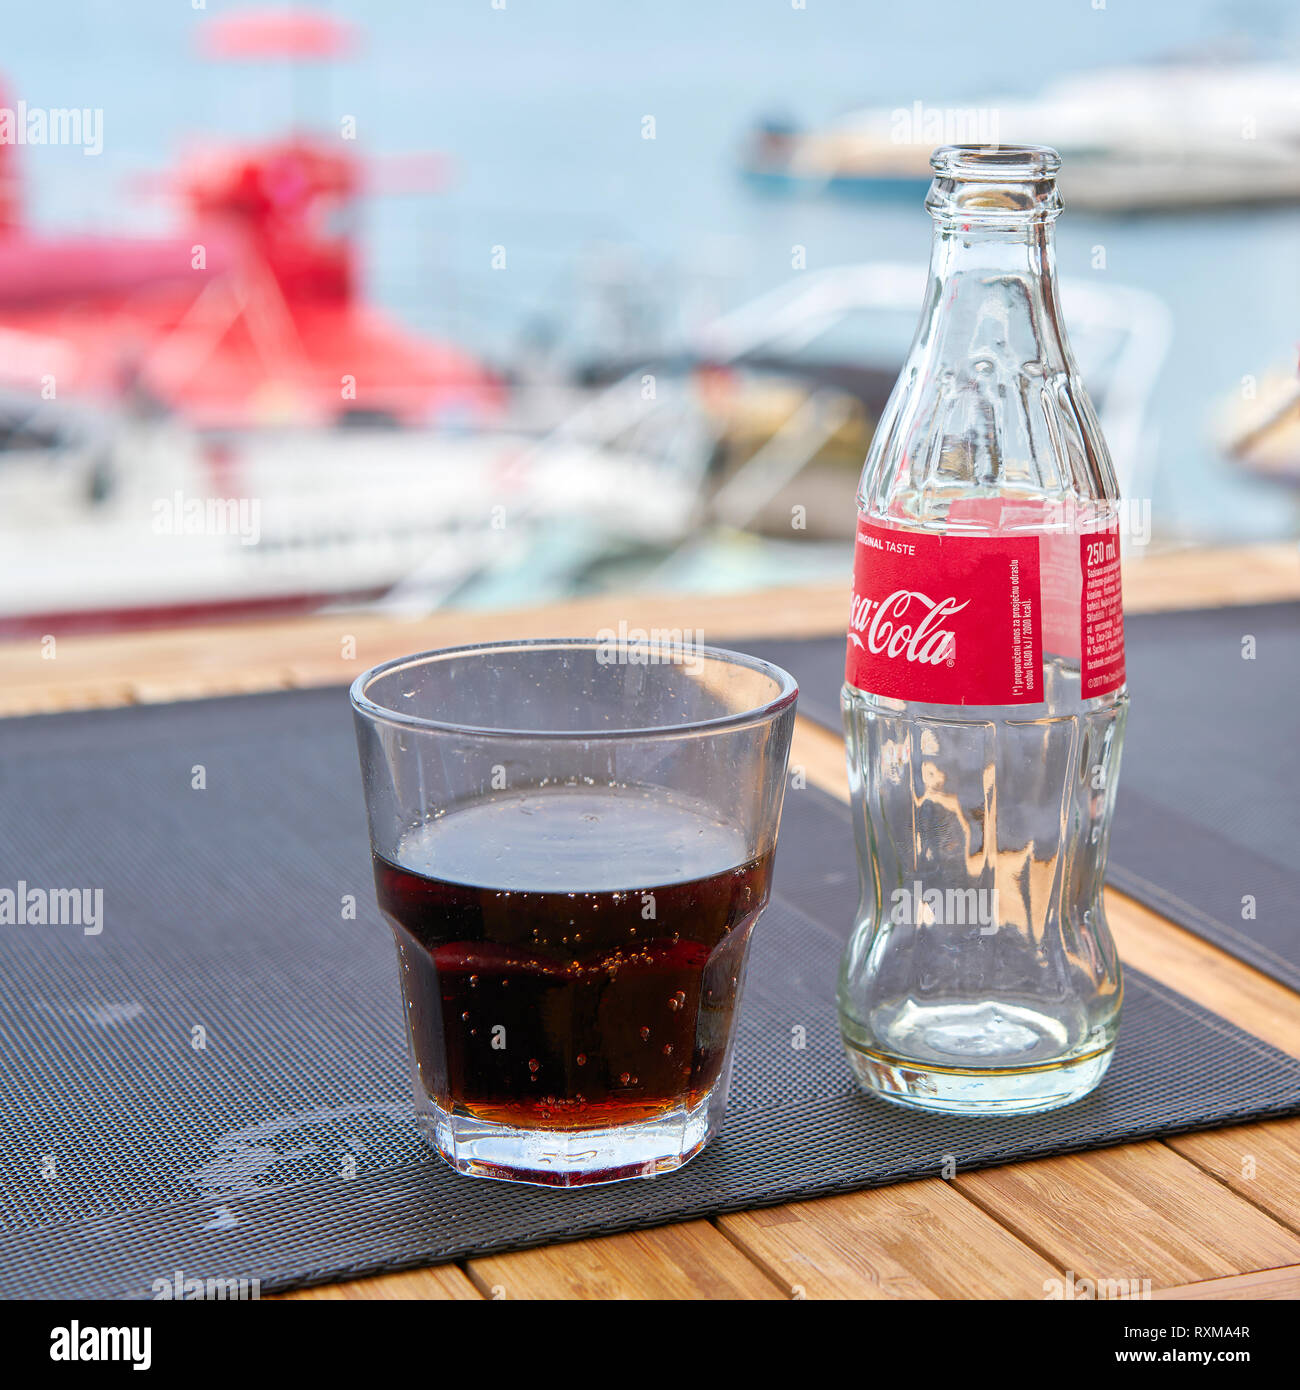 Coca Cola Salzstreuer & Pfefferstreuer Diner Glas 